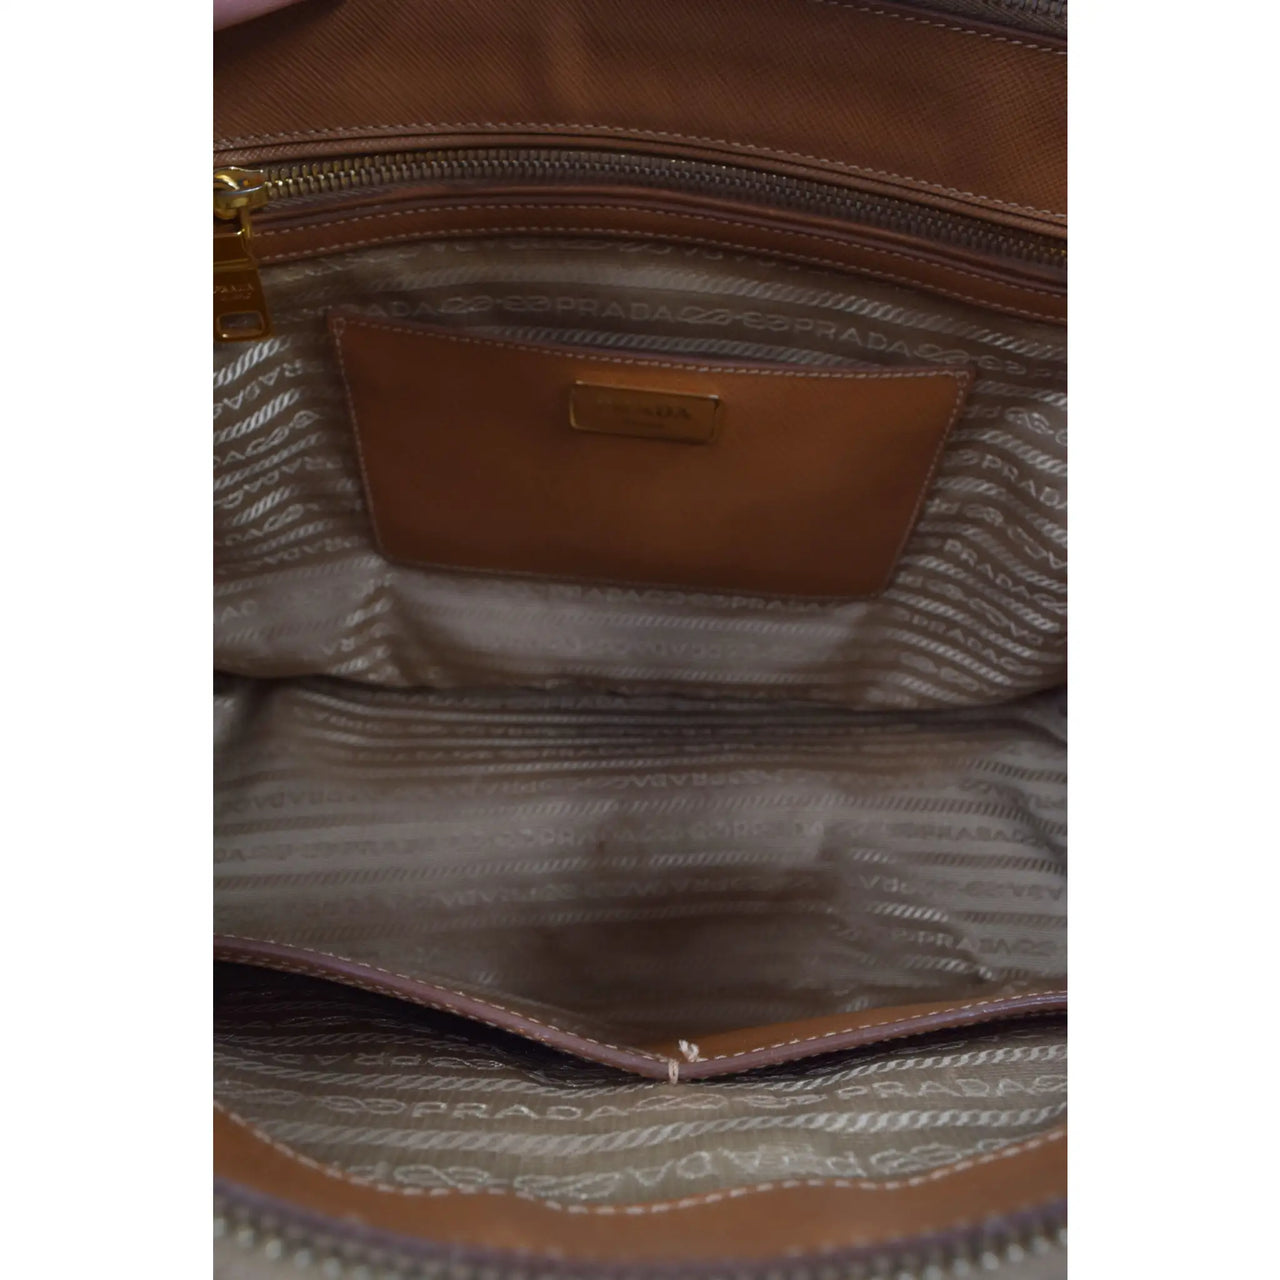 Prada Brown Leather Double Zip Top Handle Bag Prada